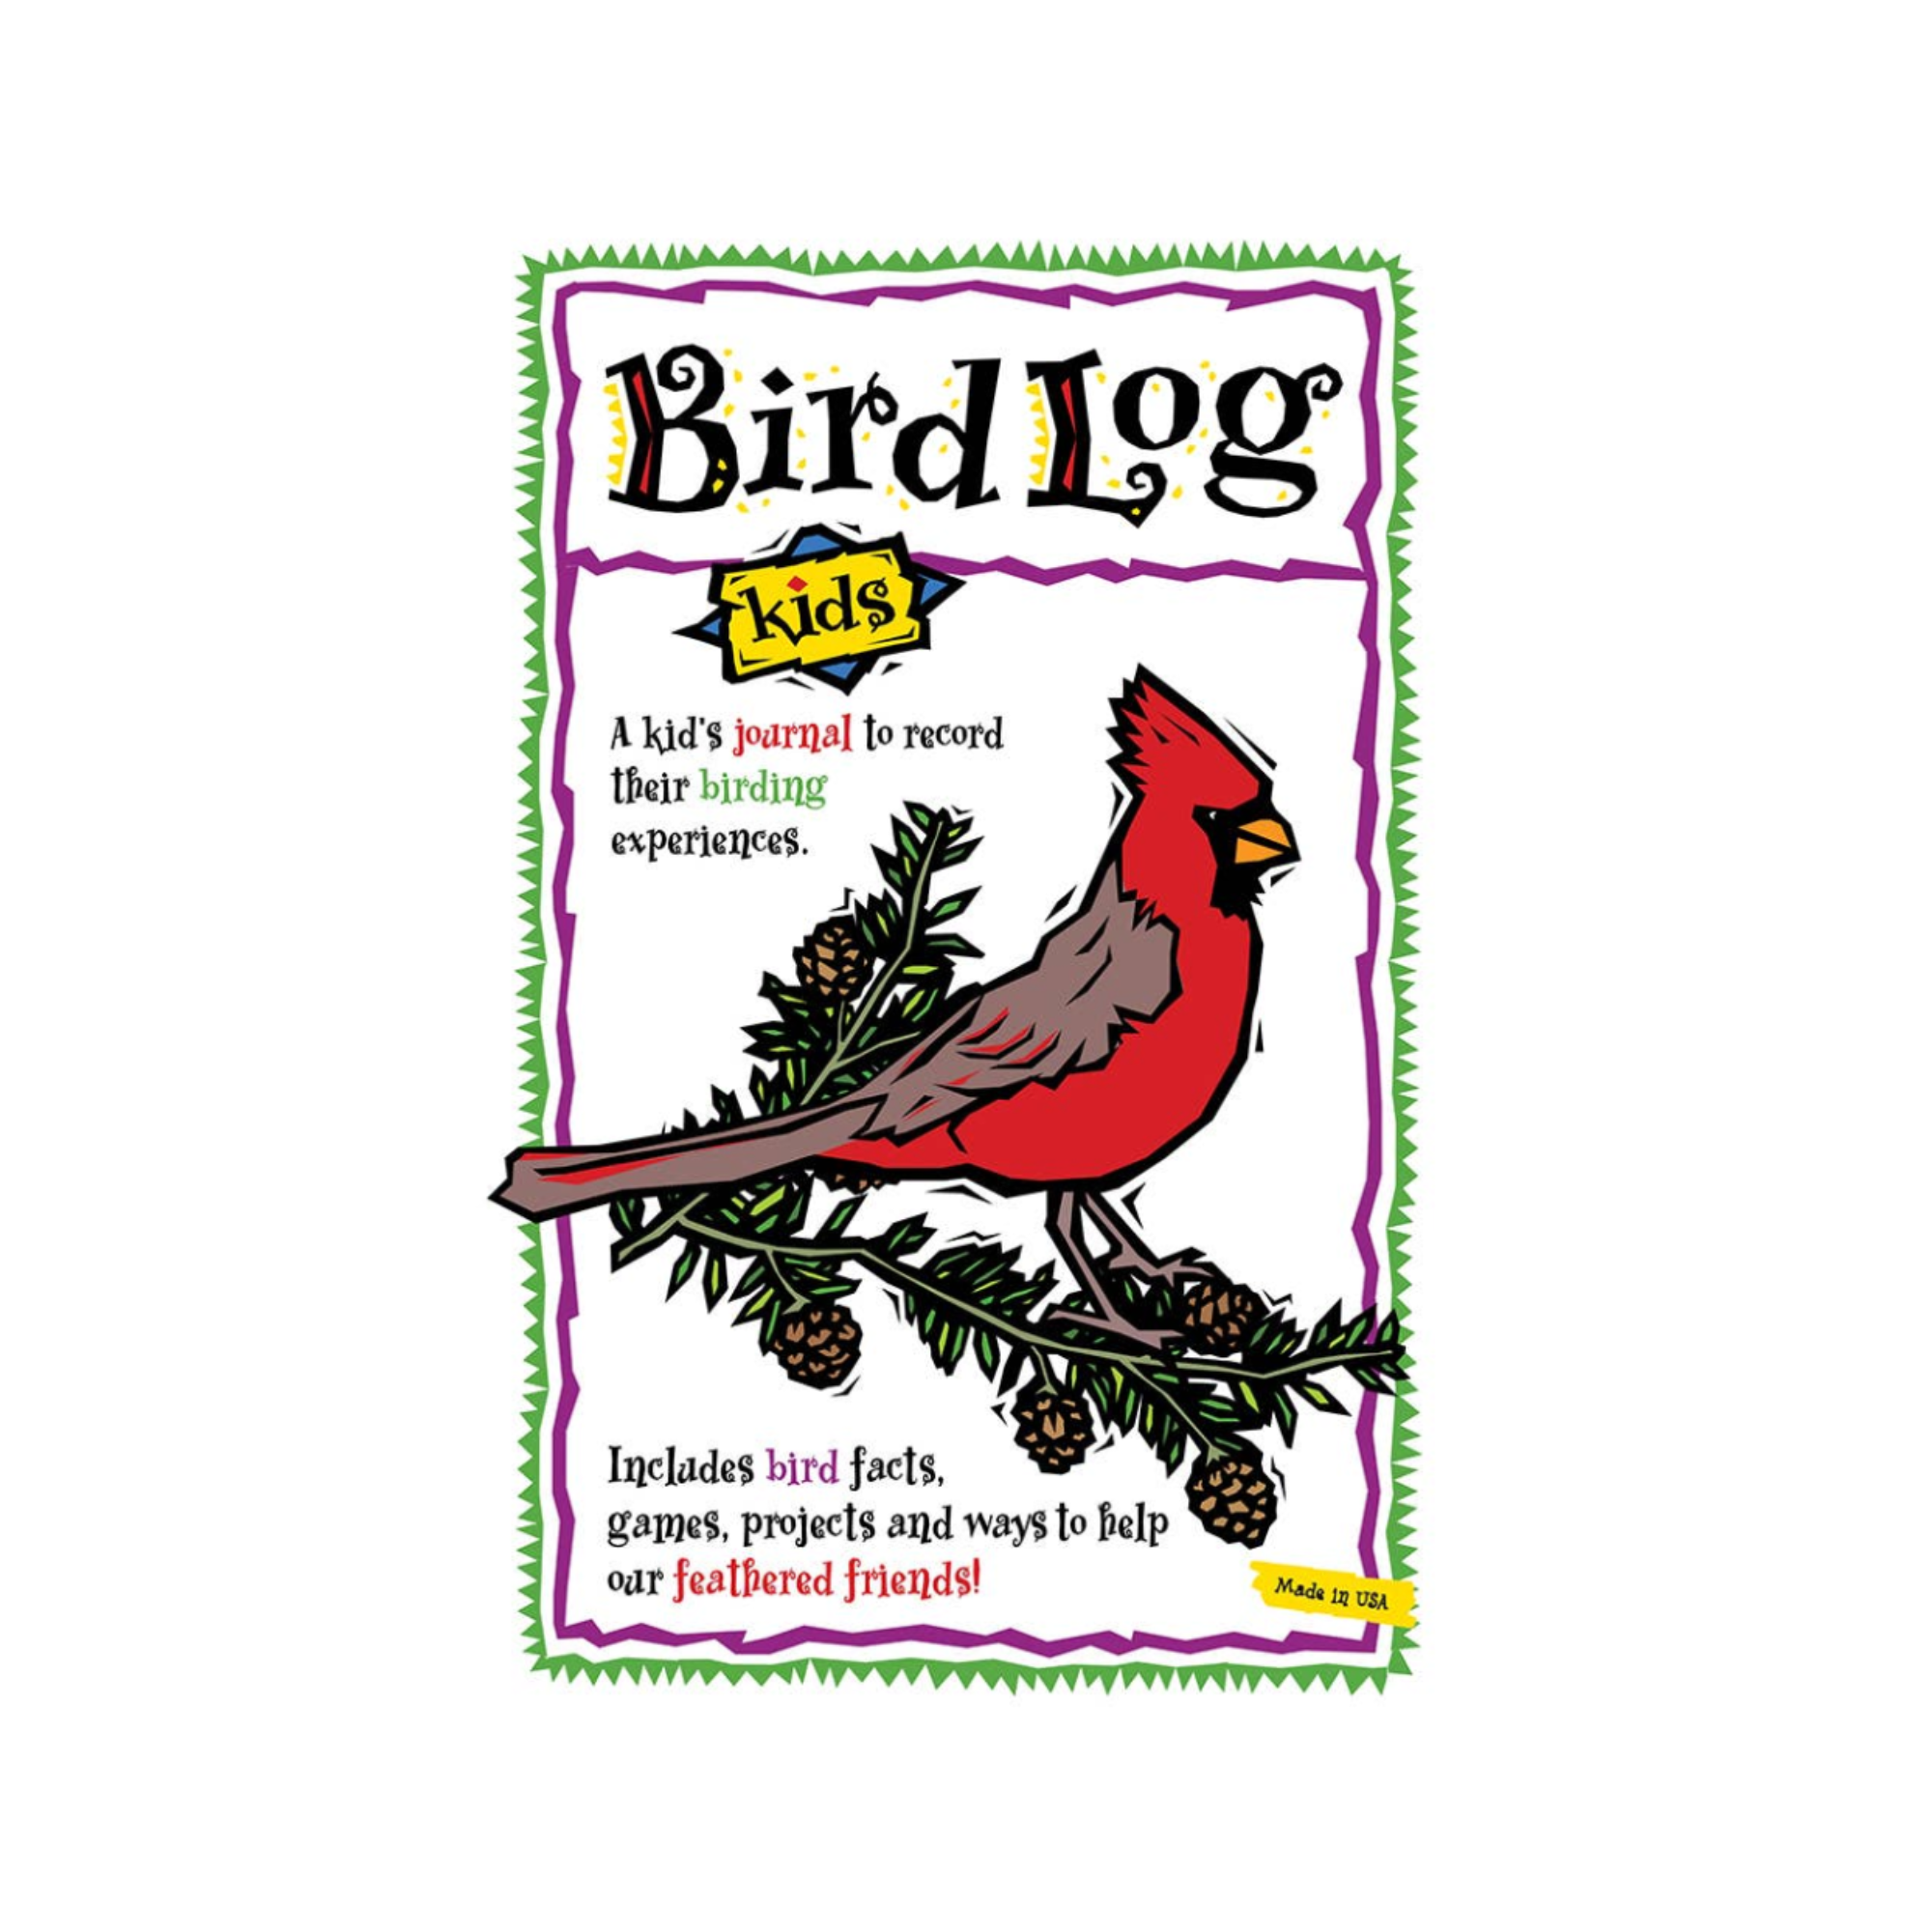 Bird Log Kids